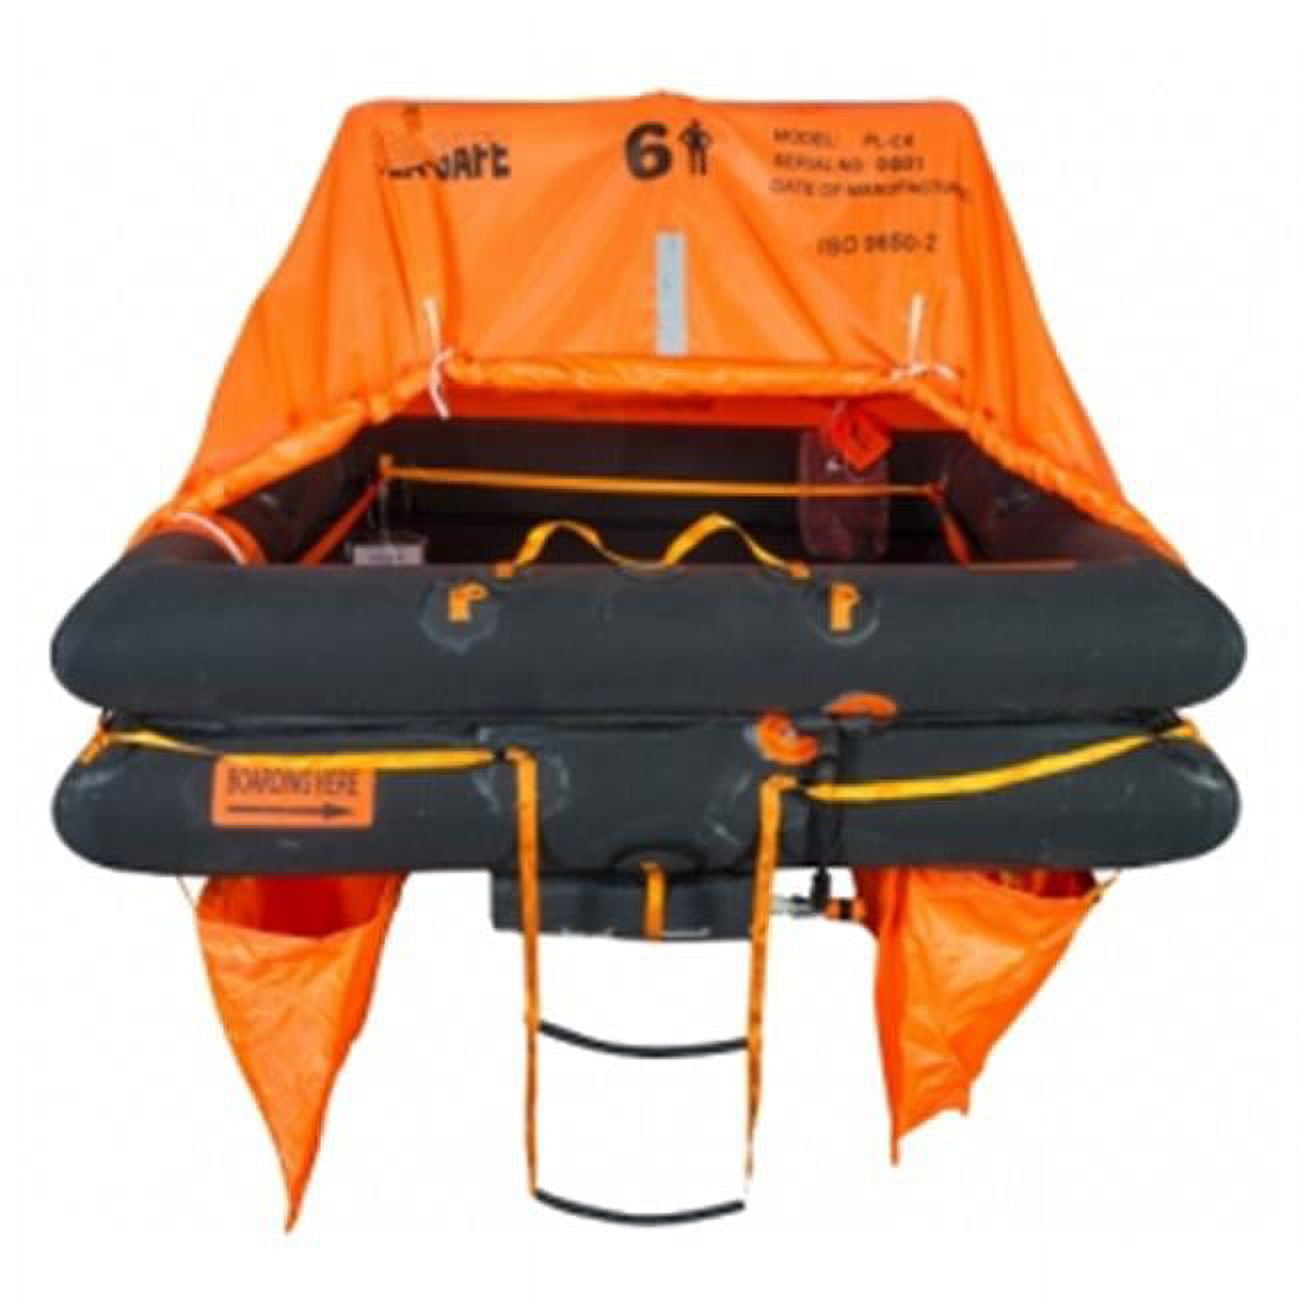 DXPLC4VR 4 Person Pro-Light Recreational Coastal Liferaft in Valise -  Seasafe